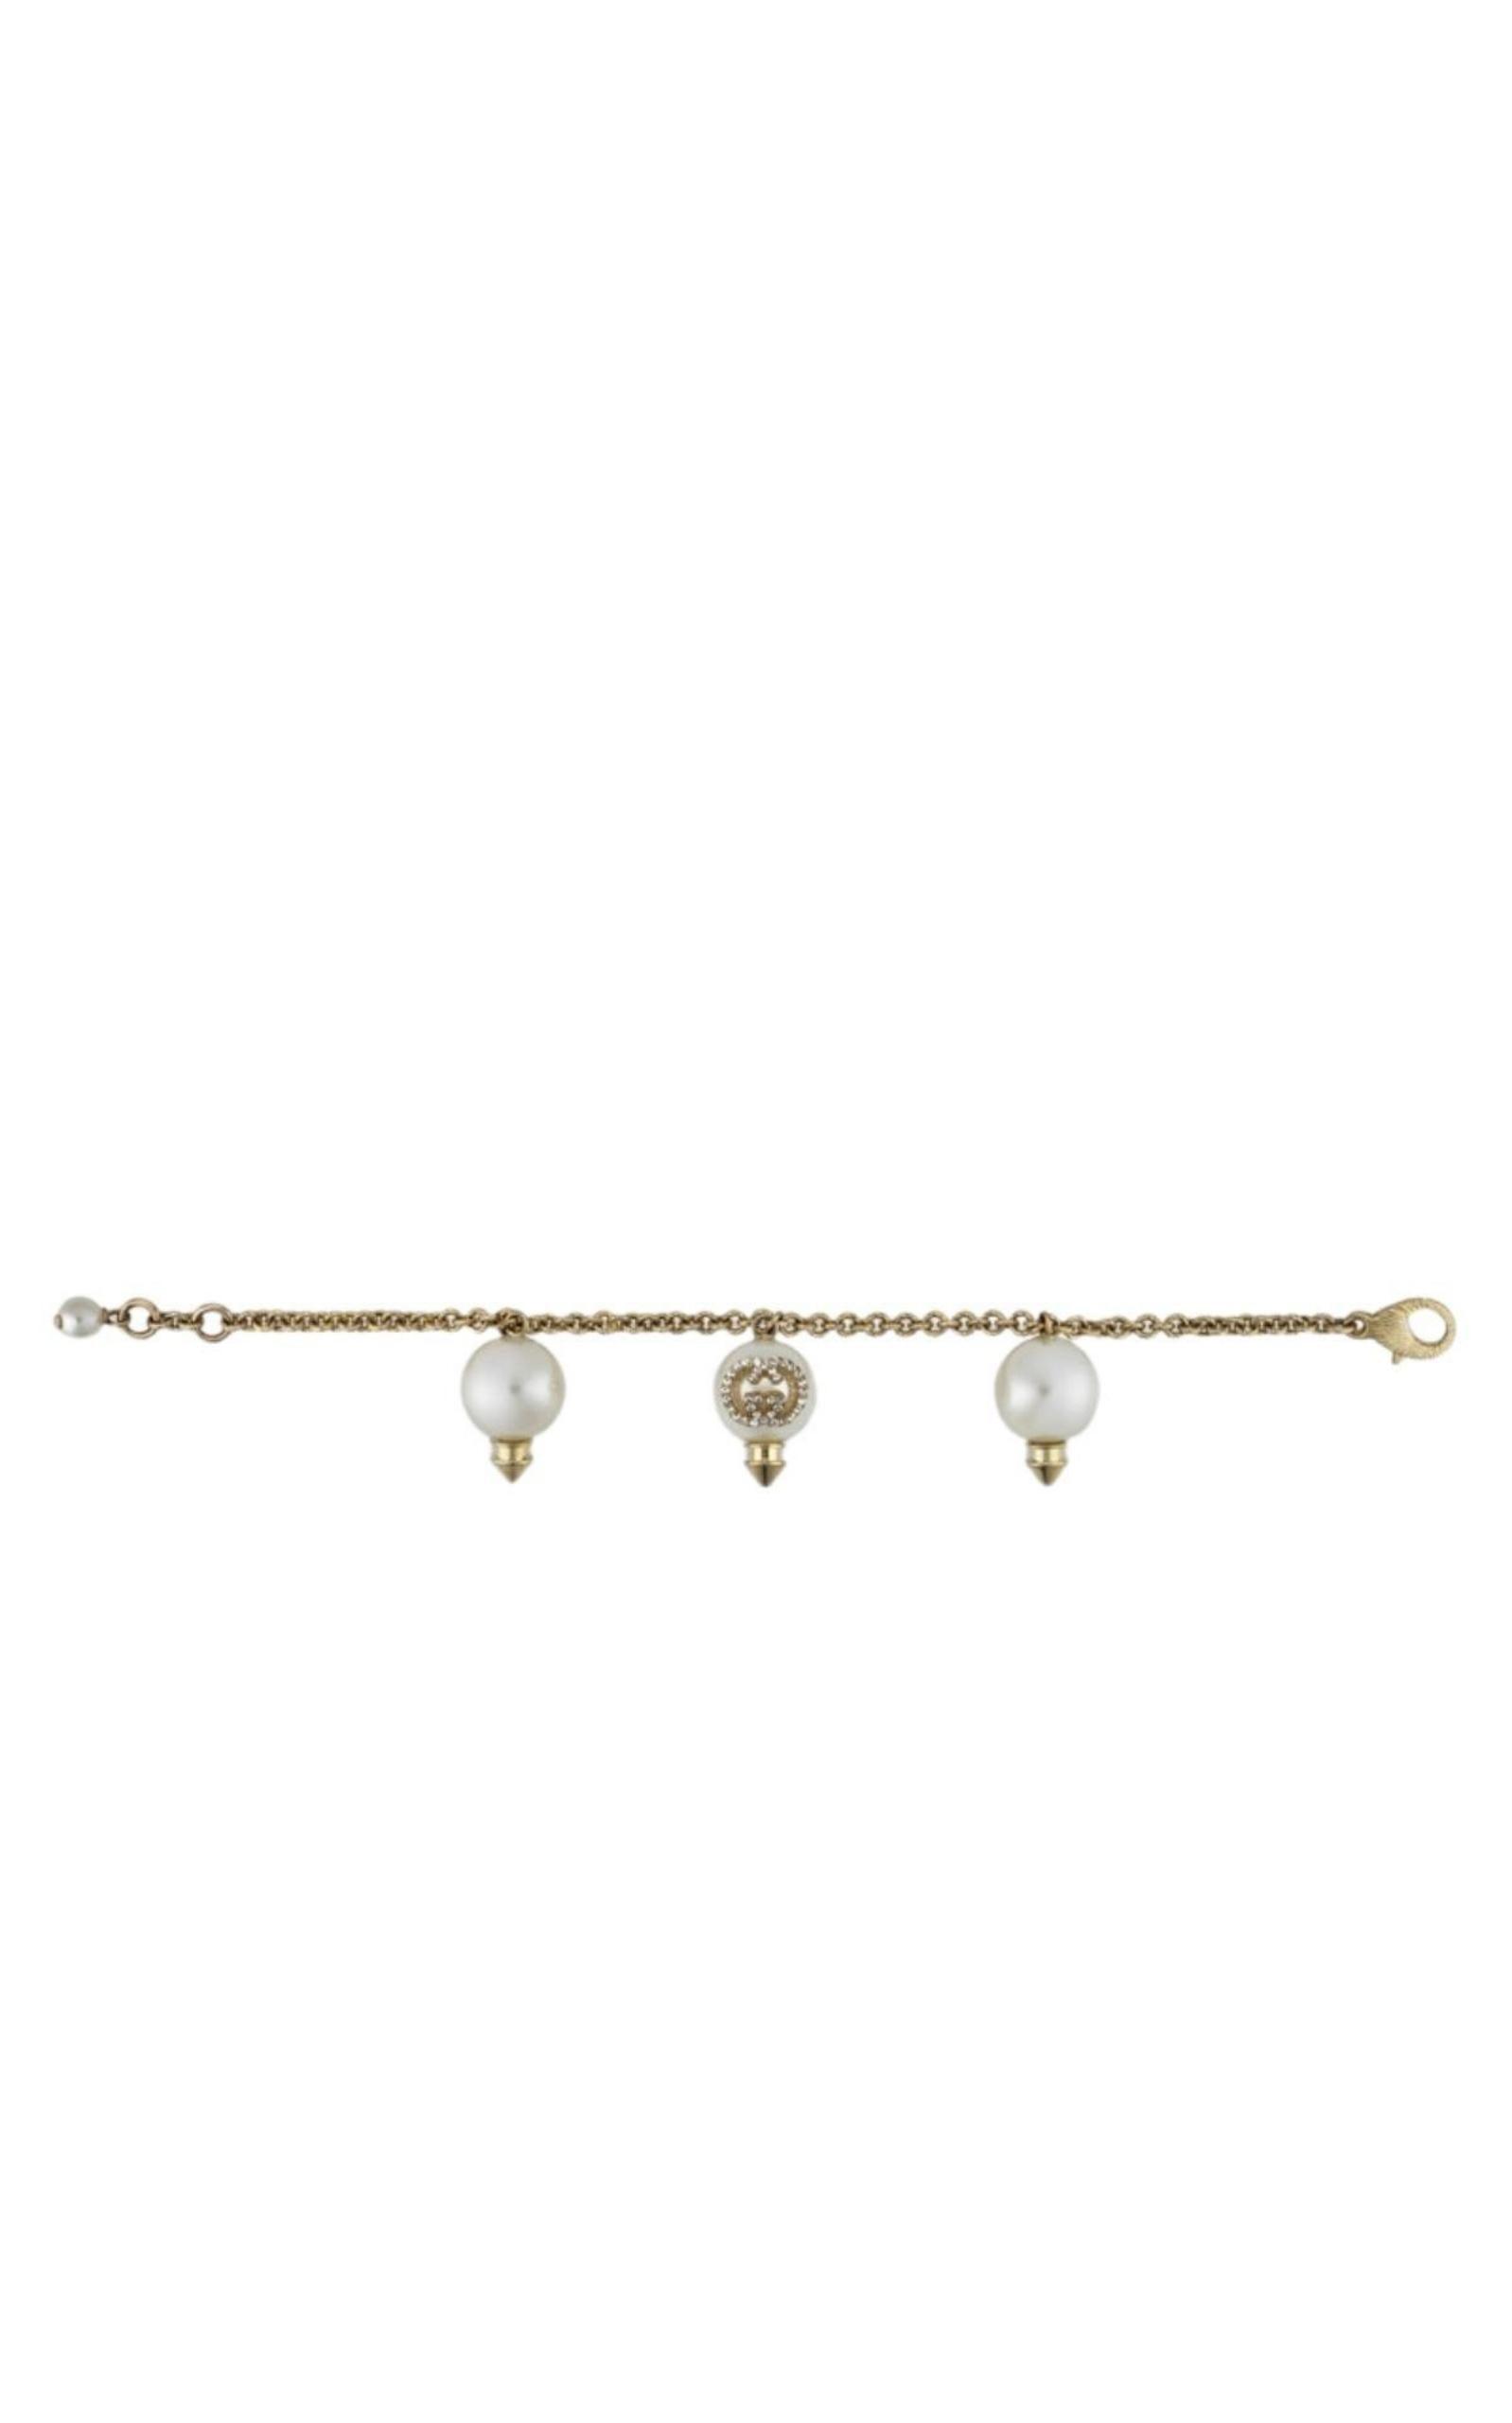  GucciInterlocking G Bracelet with Pearls - Runway Catalog